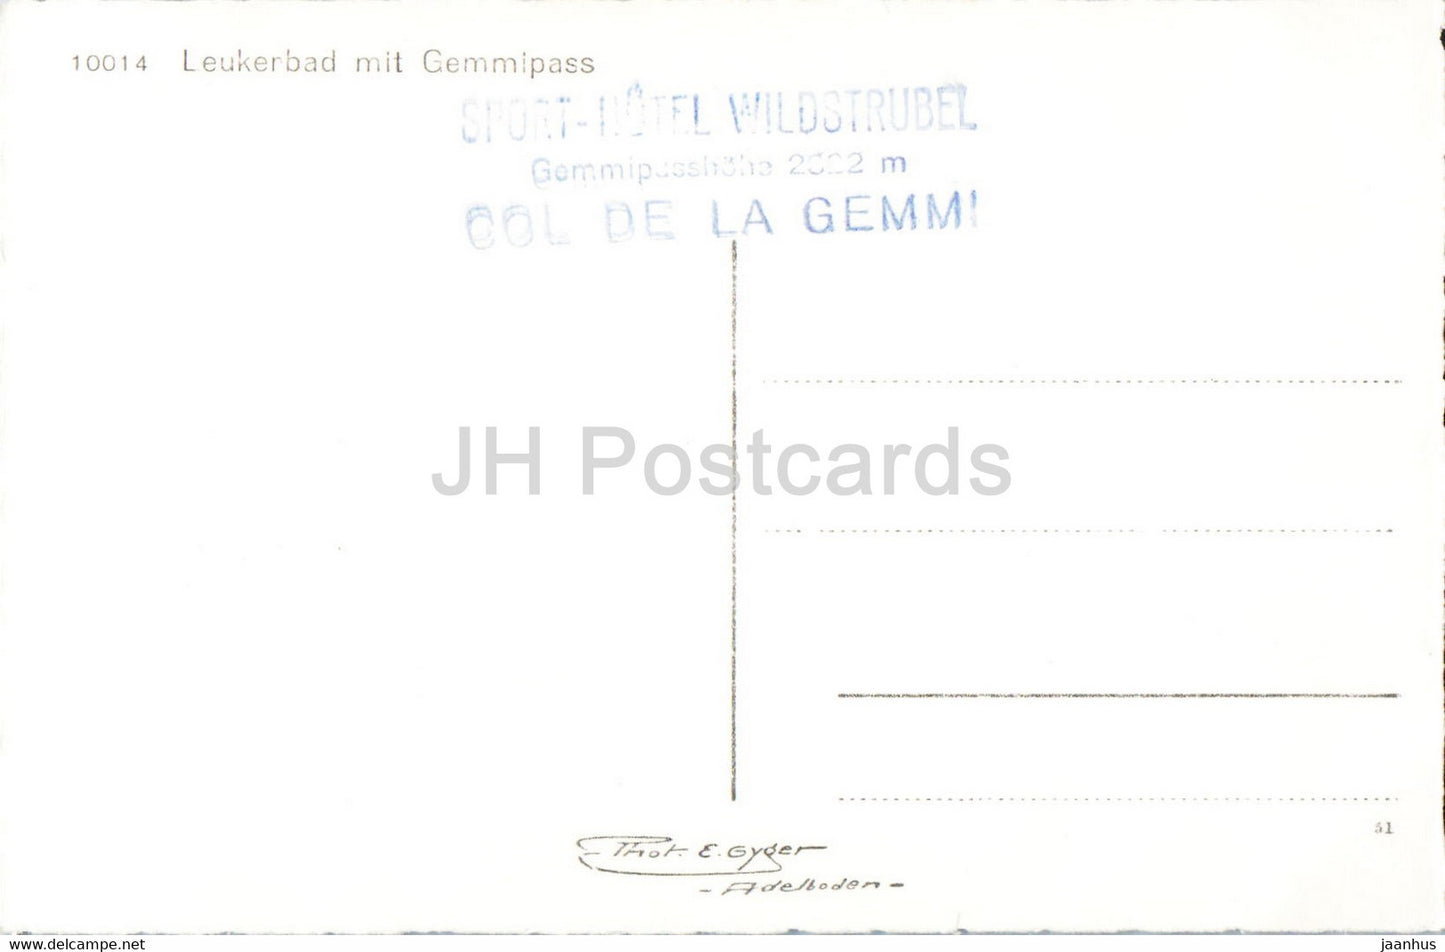 Leukerbad mit Gemmipass - 10014 - old postcard - Switzerland - unused